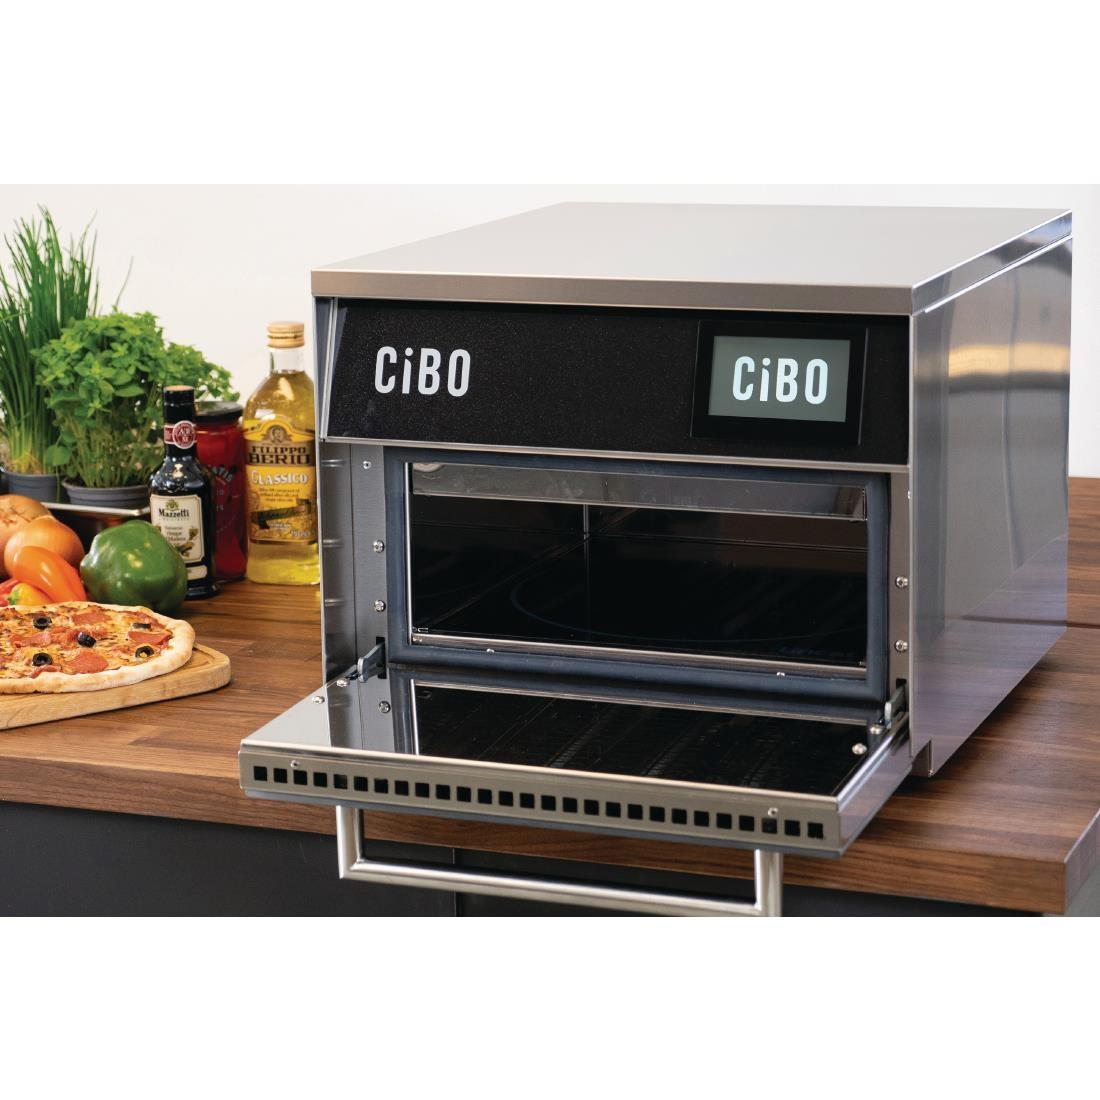 Lincat Cibo High Speed Oven Black - CY520  - 7